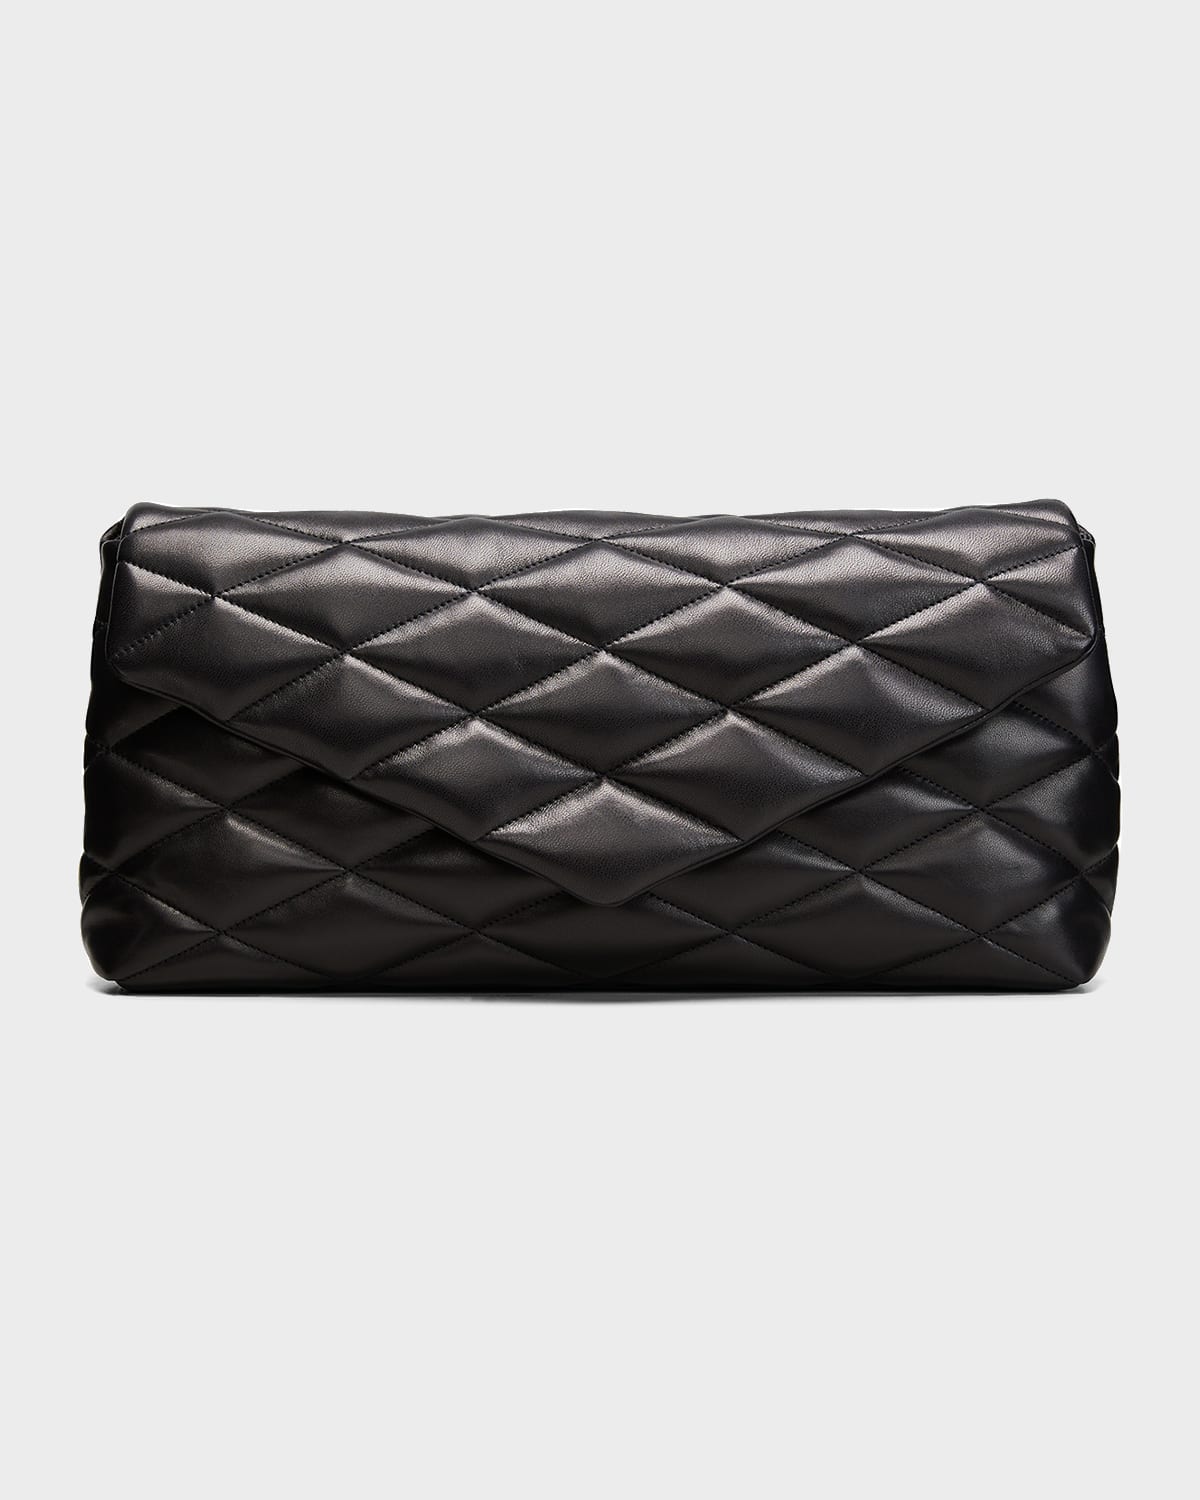 Saint Laurent Sade Puffy Leather Envelope Clutch Bag In Black